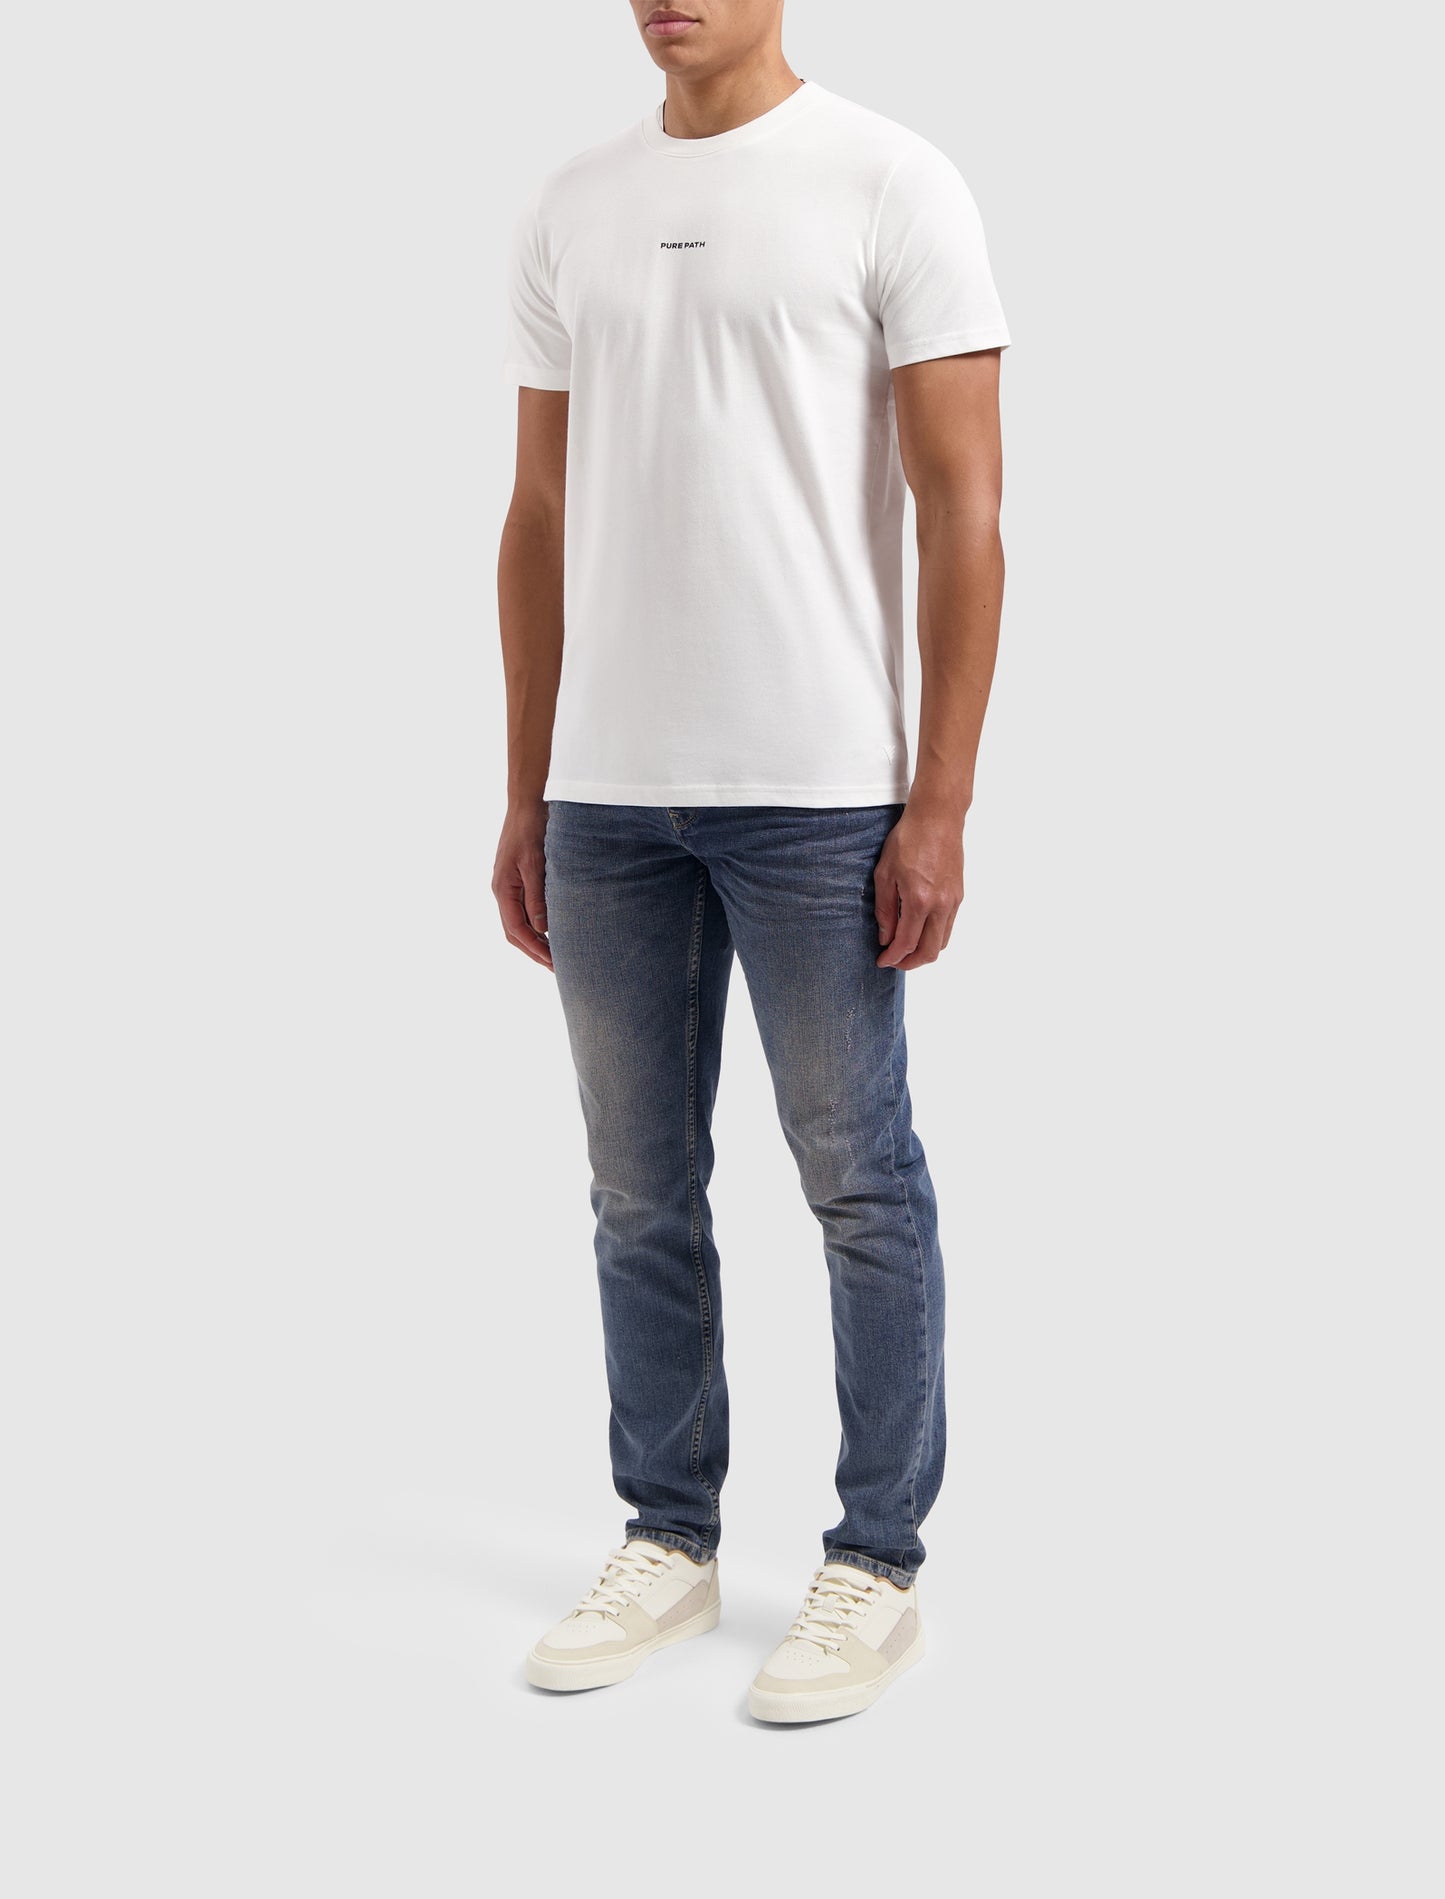 PURE PATH | Jardin Prive T-Shirt  - White